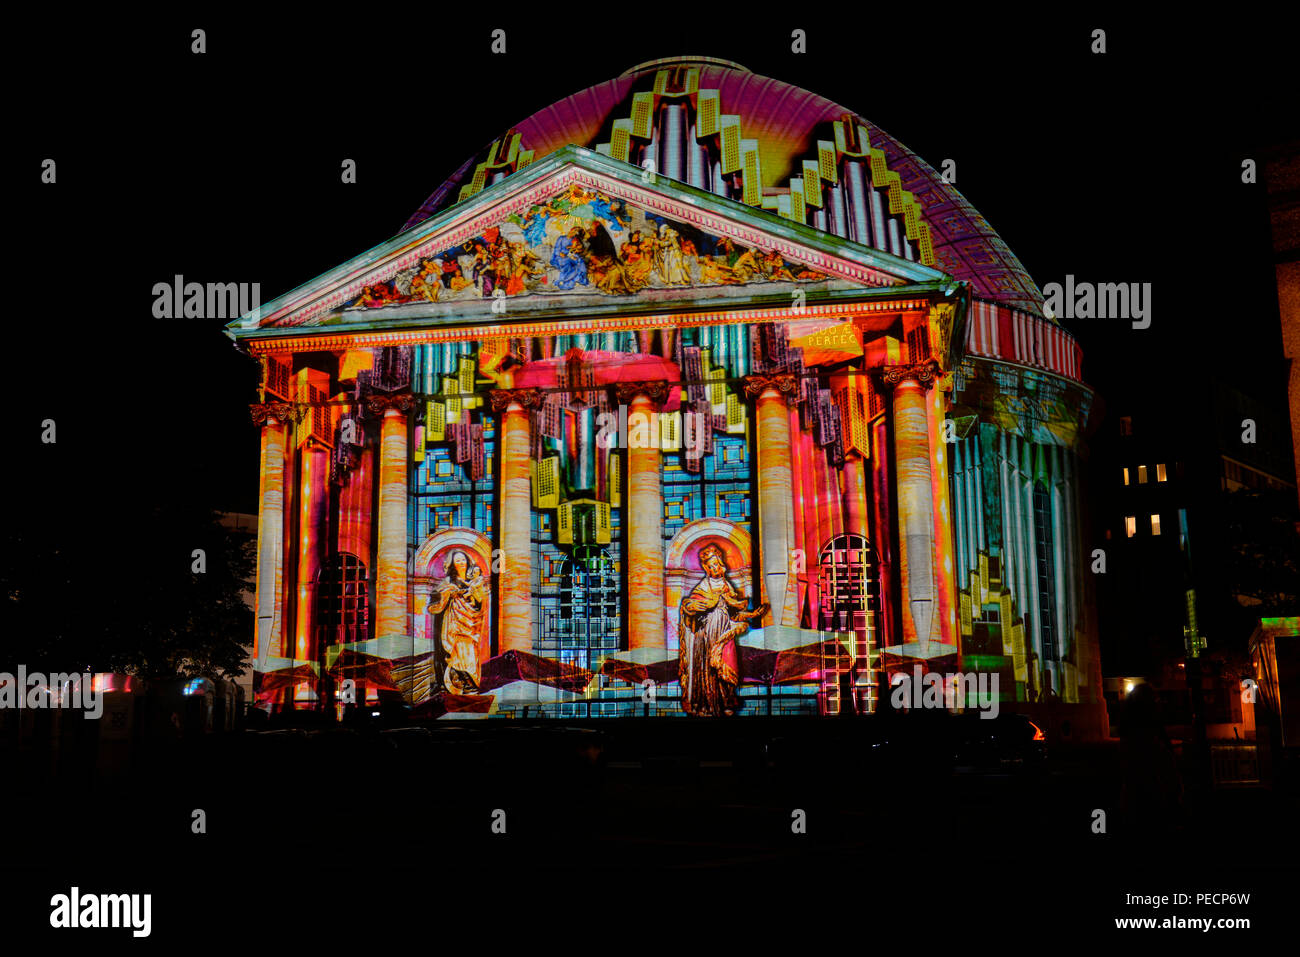 Festival of Lights, Hedwigskathedrale, Bebelplatz, Mitte, Berlin, Deutschland Stock Photo